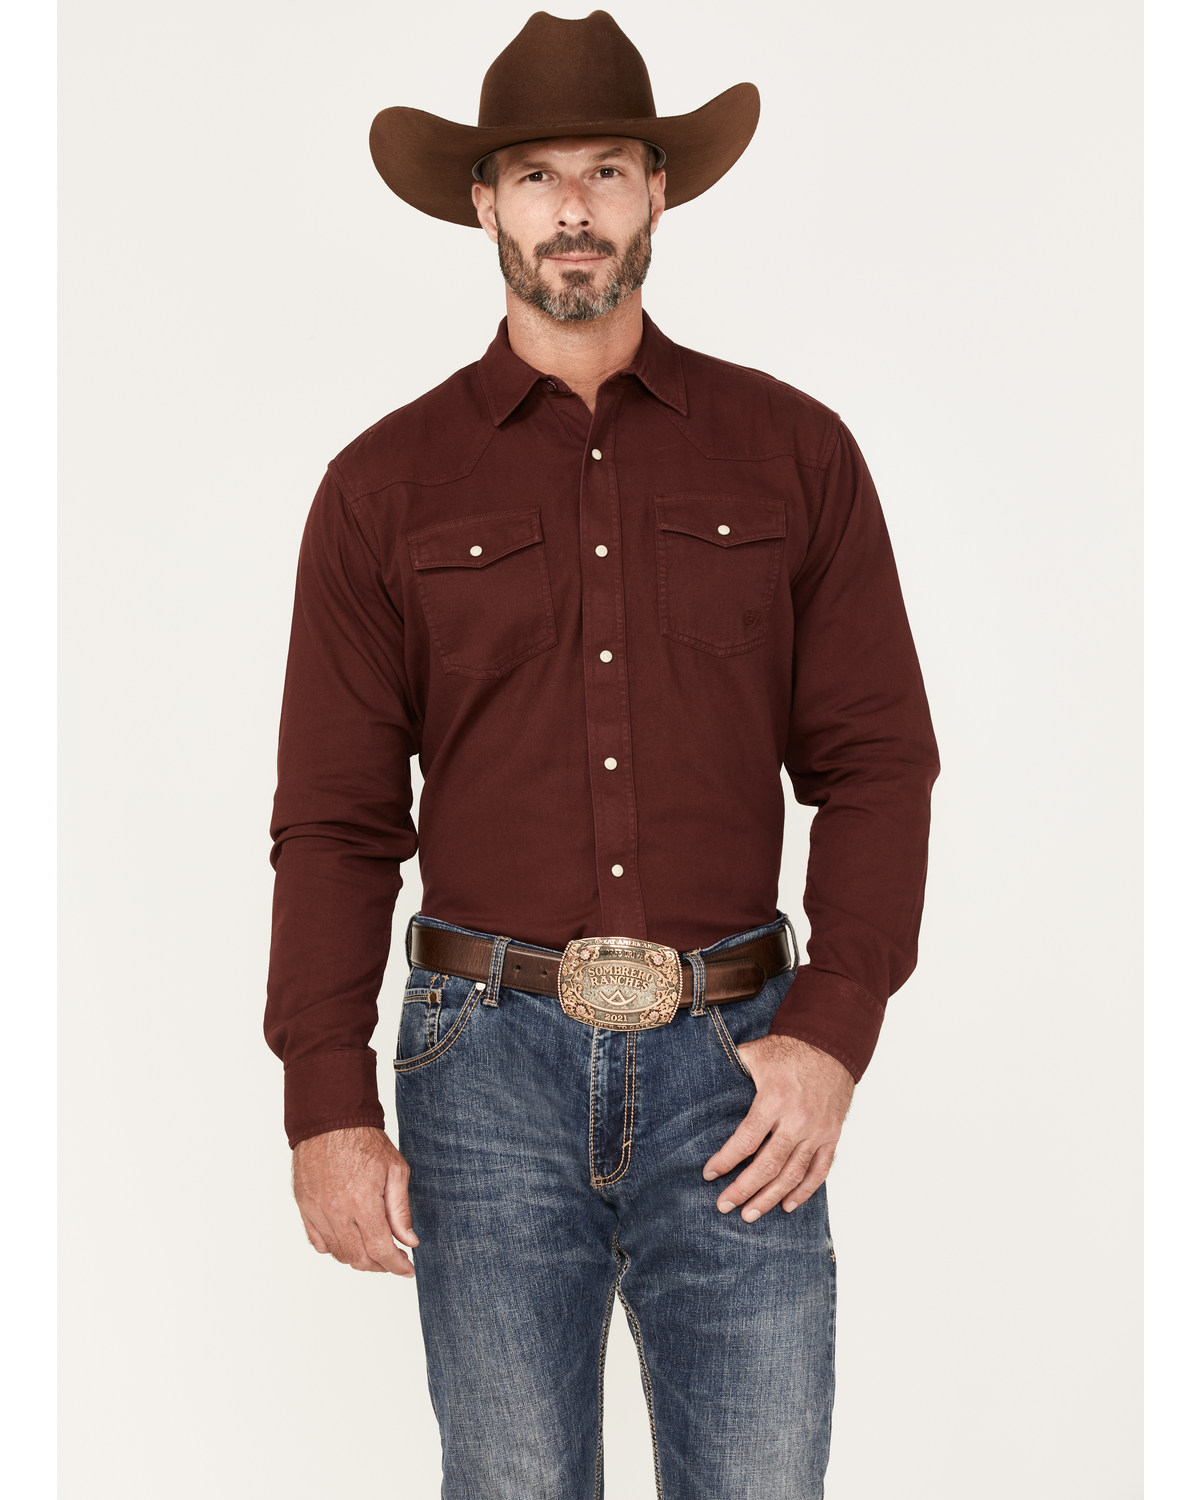 Ariat Men's Jurlington Retro Fit Solid Long Sleeve Pearl Snap Western Shirt